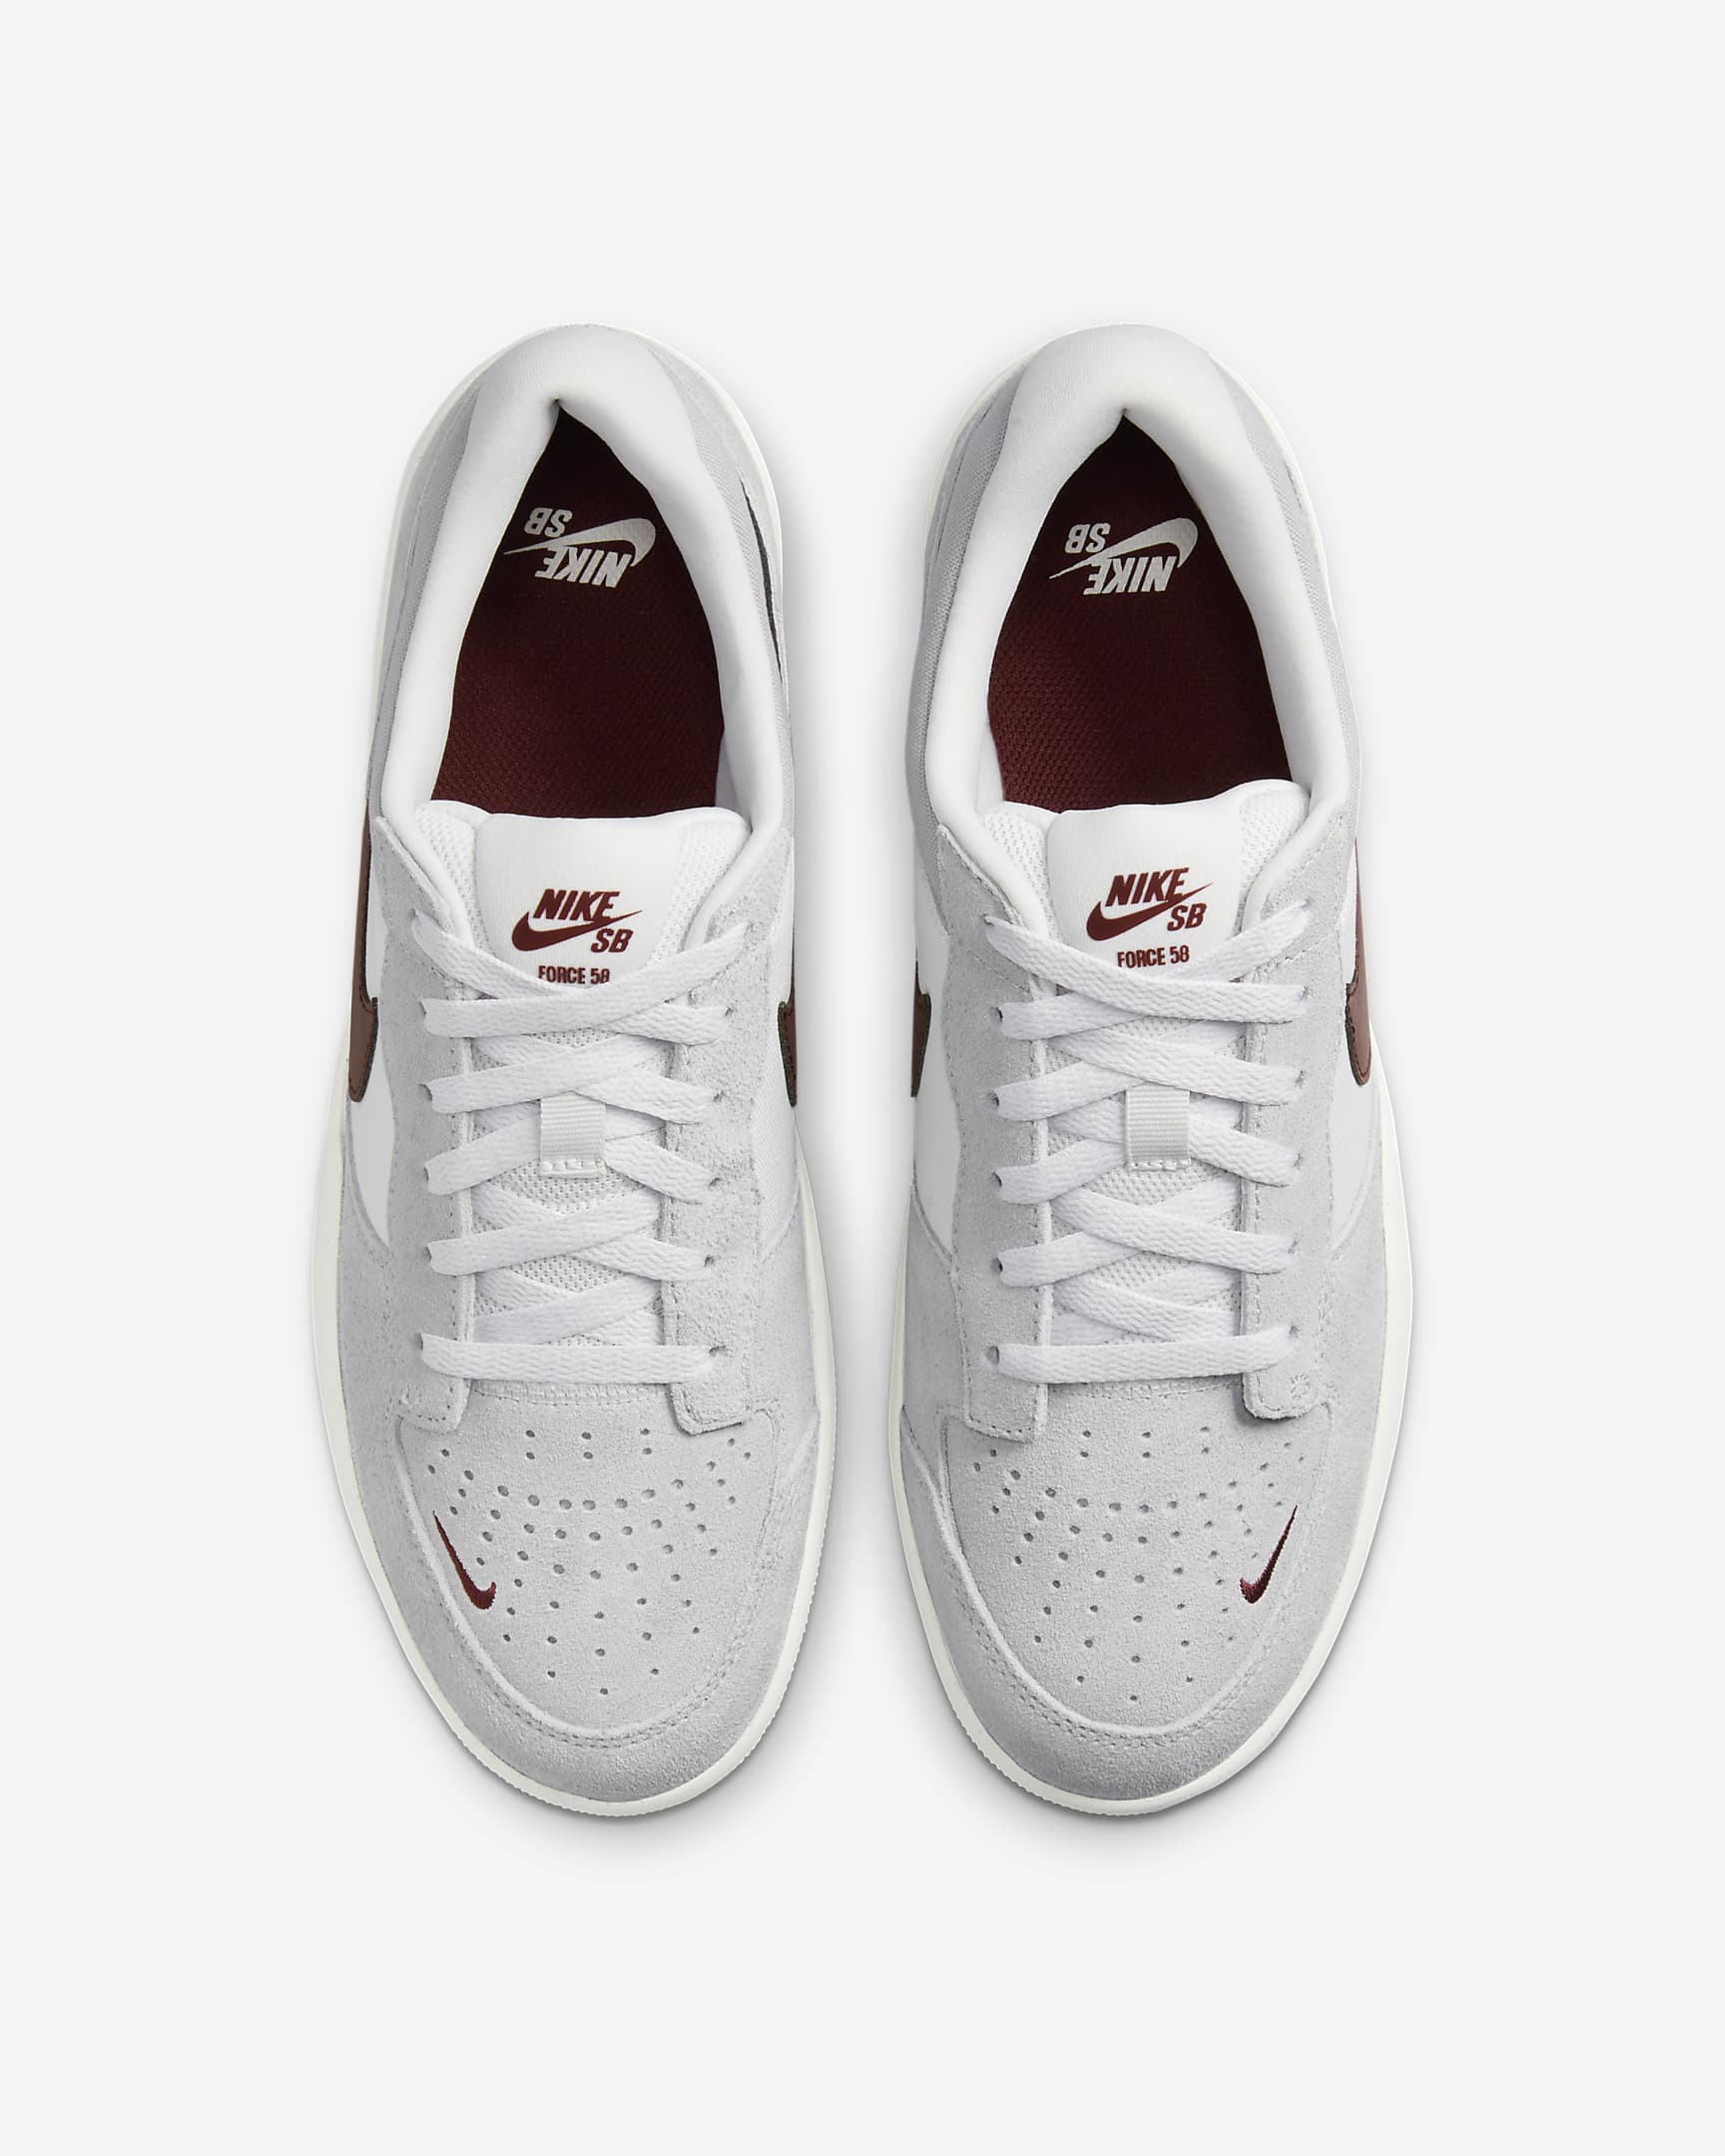 Nike SB Force 58 Skate Shoes - Platinum Tint/Wolf Grey/Summit White/Dark Team Red